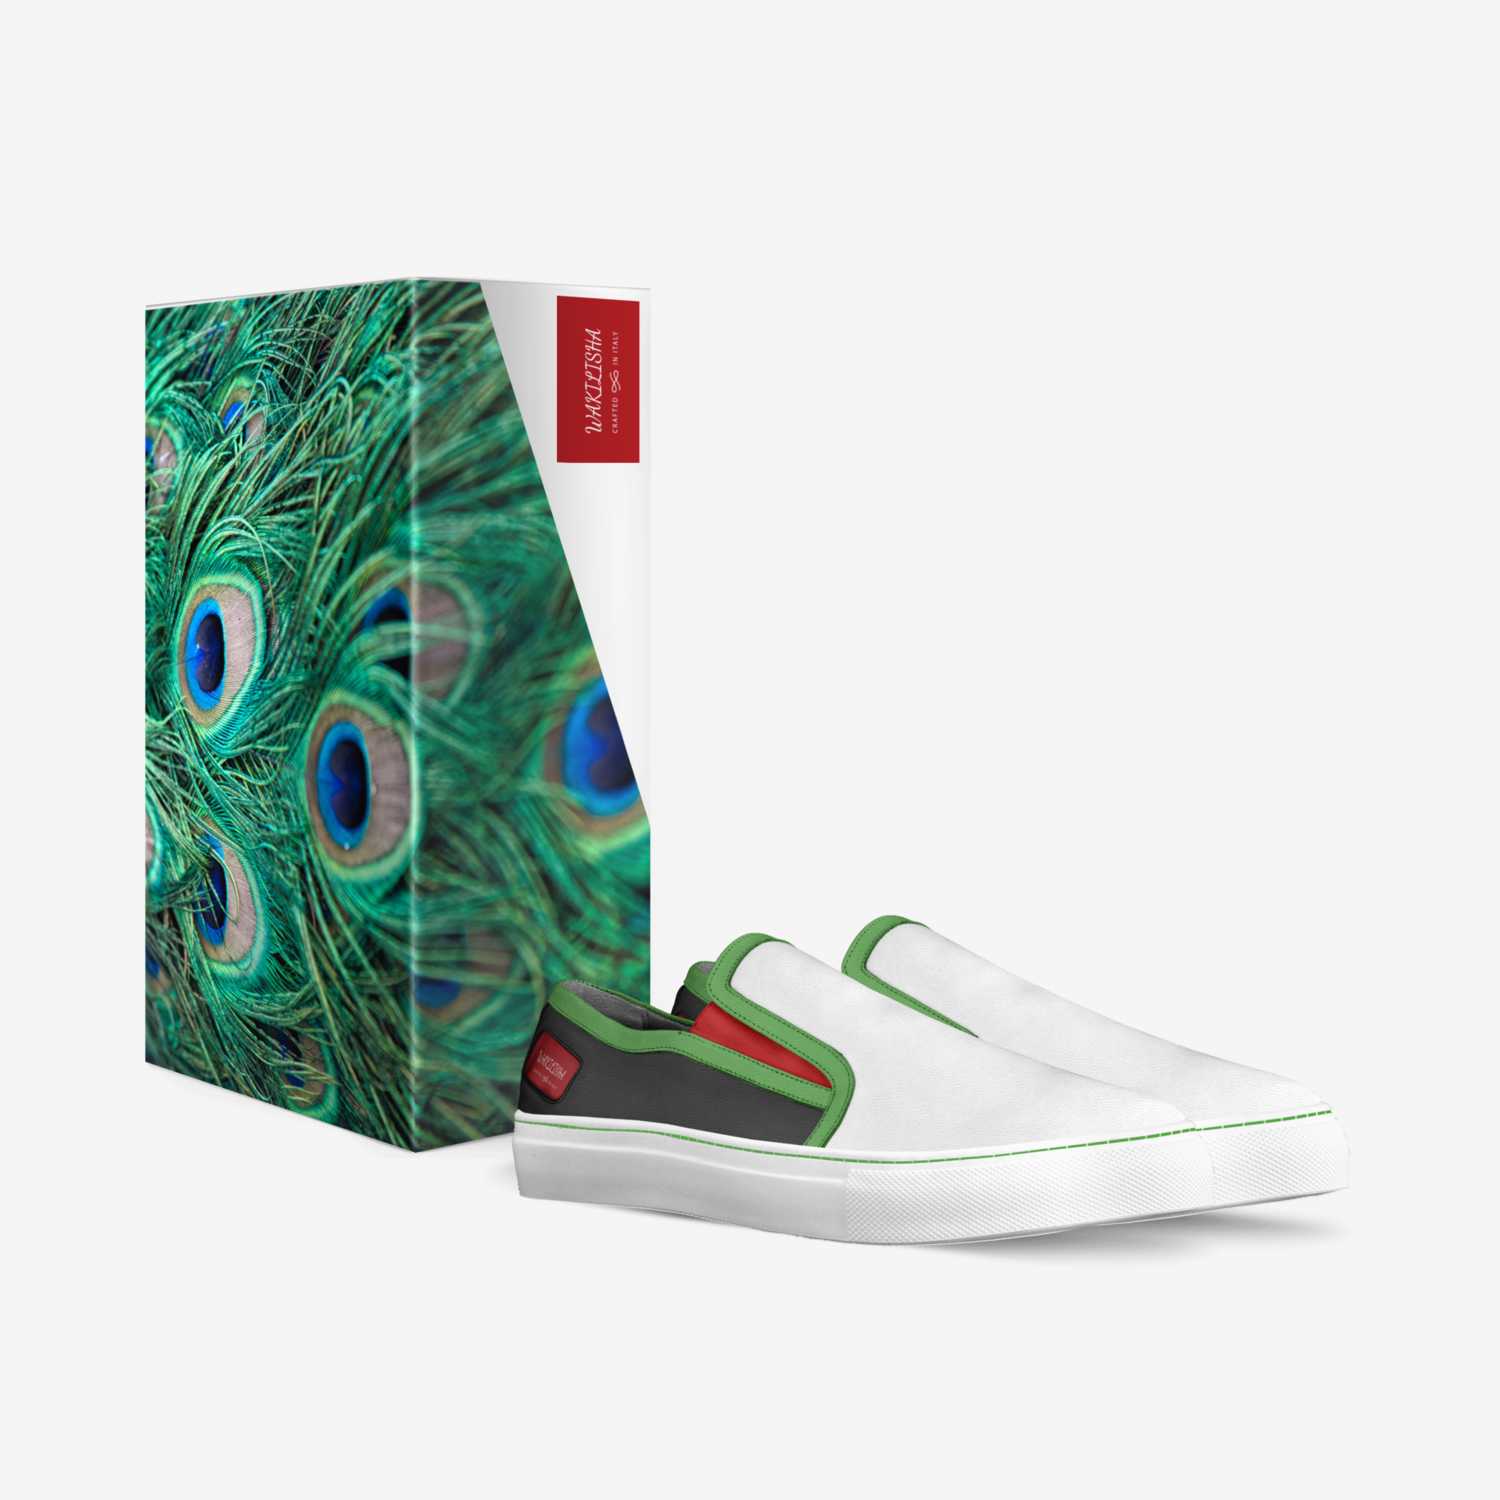 WAKILISHA custom made in Italy shoes by Allan Githinji | Box view